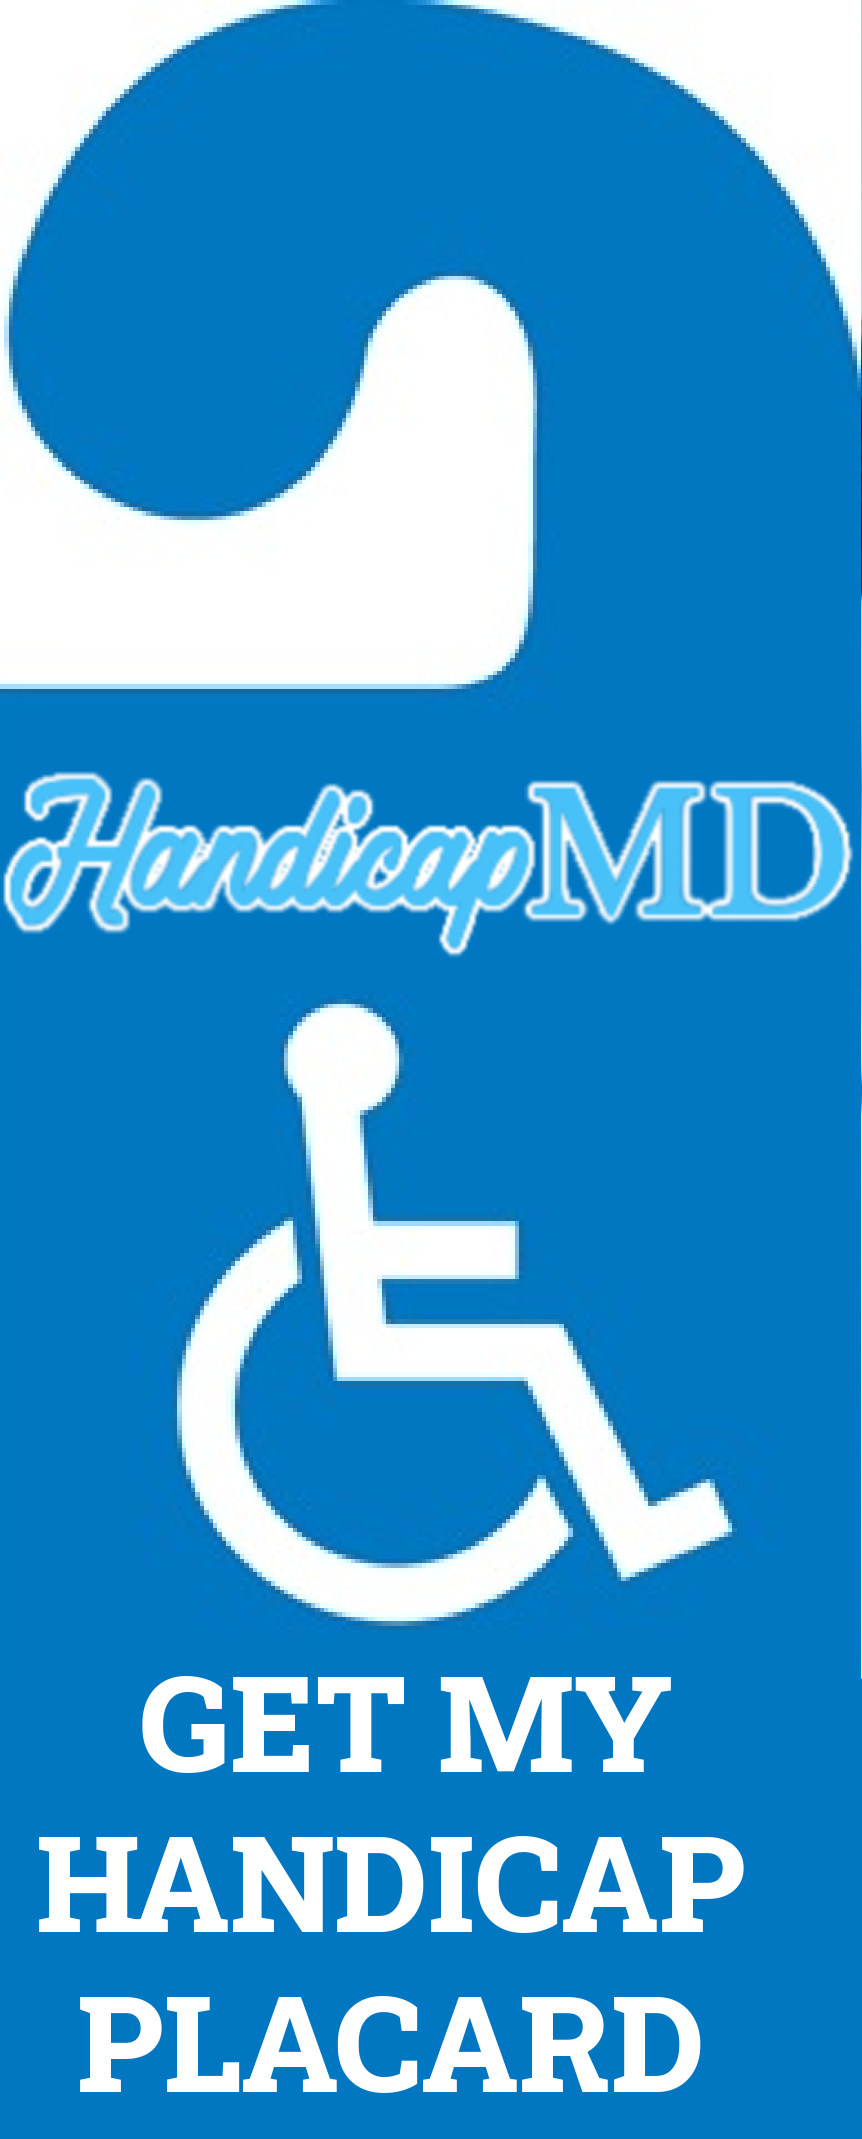 Vermont Handicap Parking Placards